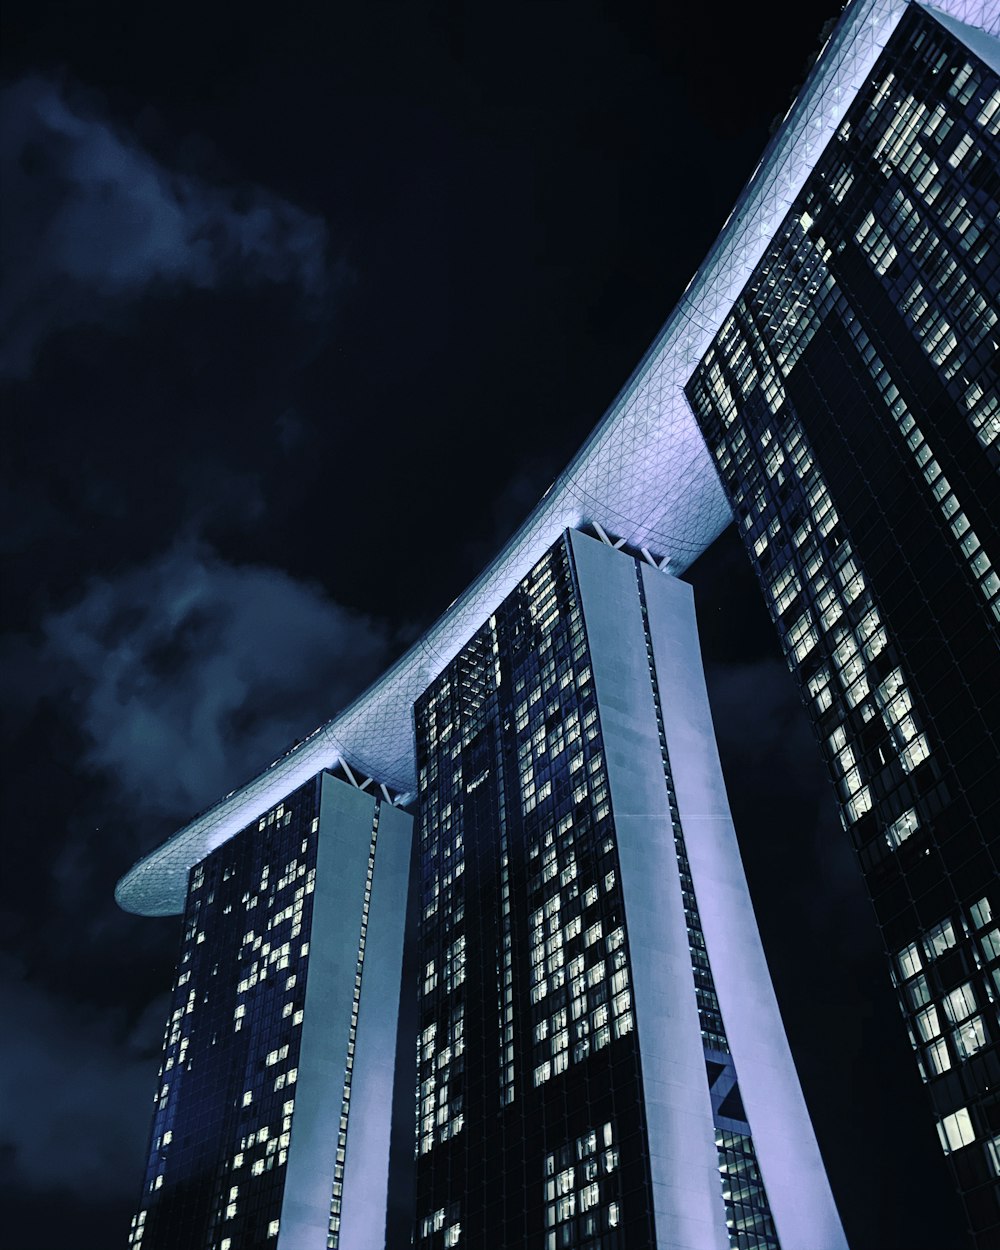 Marina bay,Singapore during nighttime